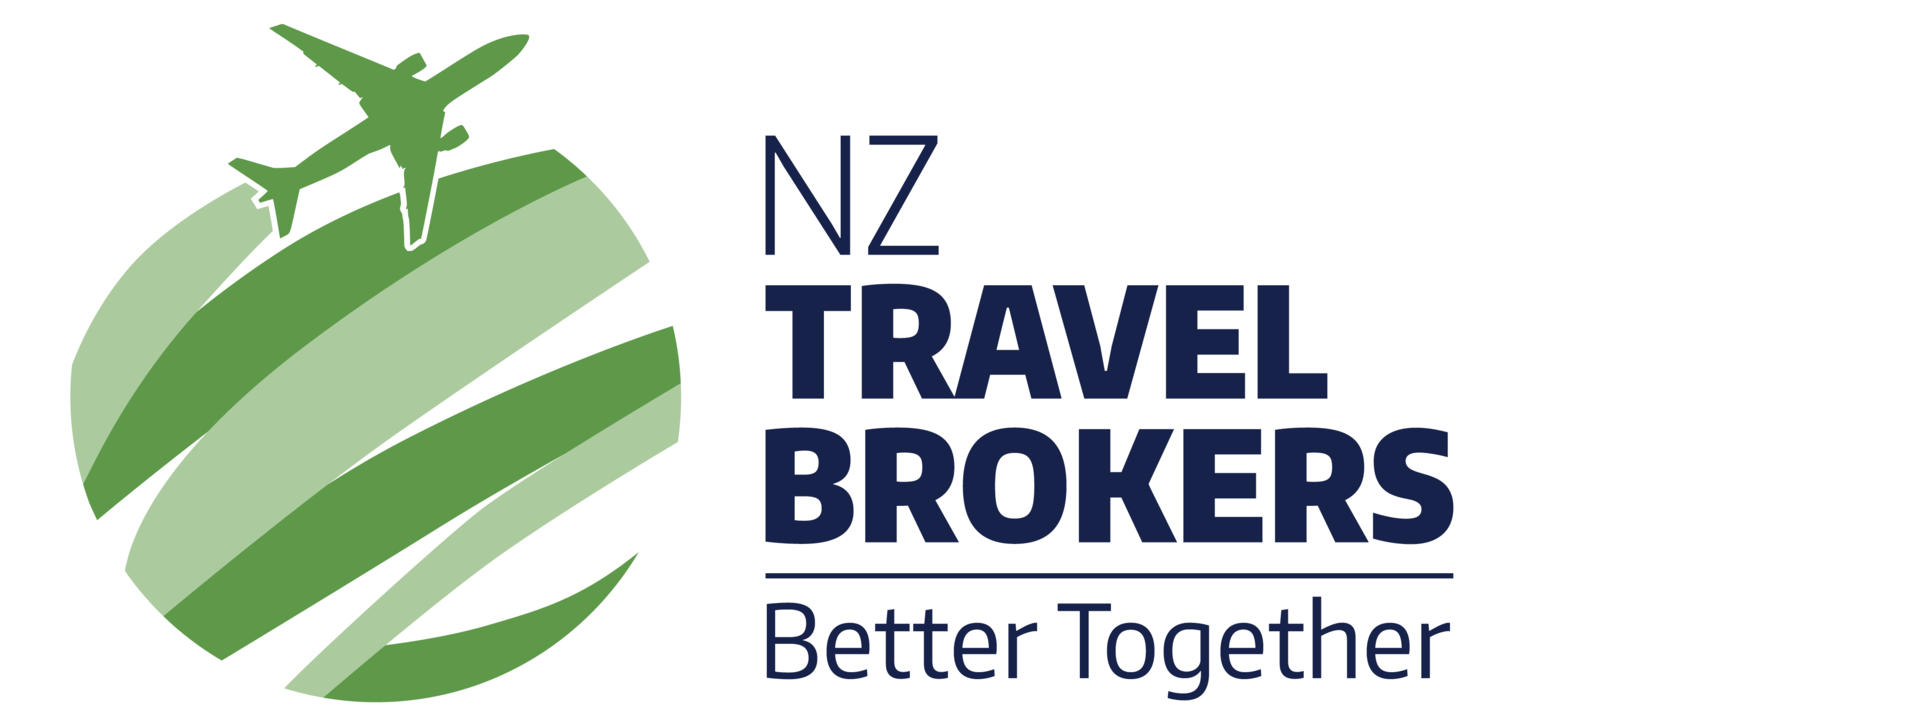 nztb-logo-better-together.jpg